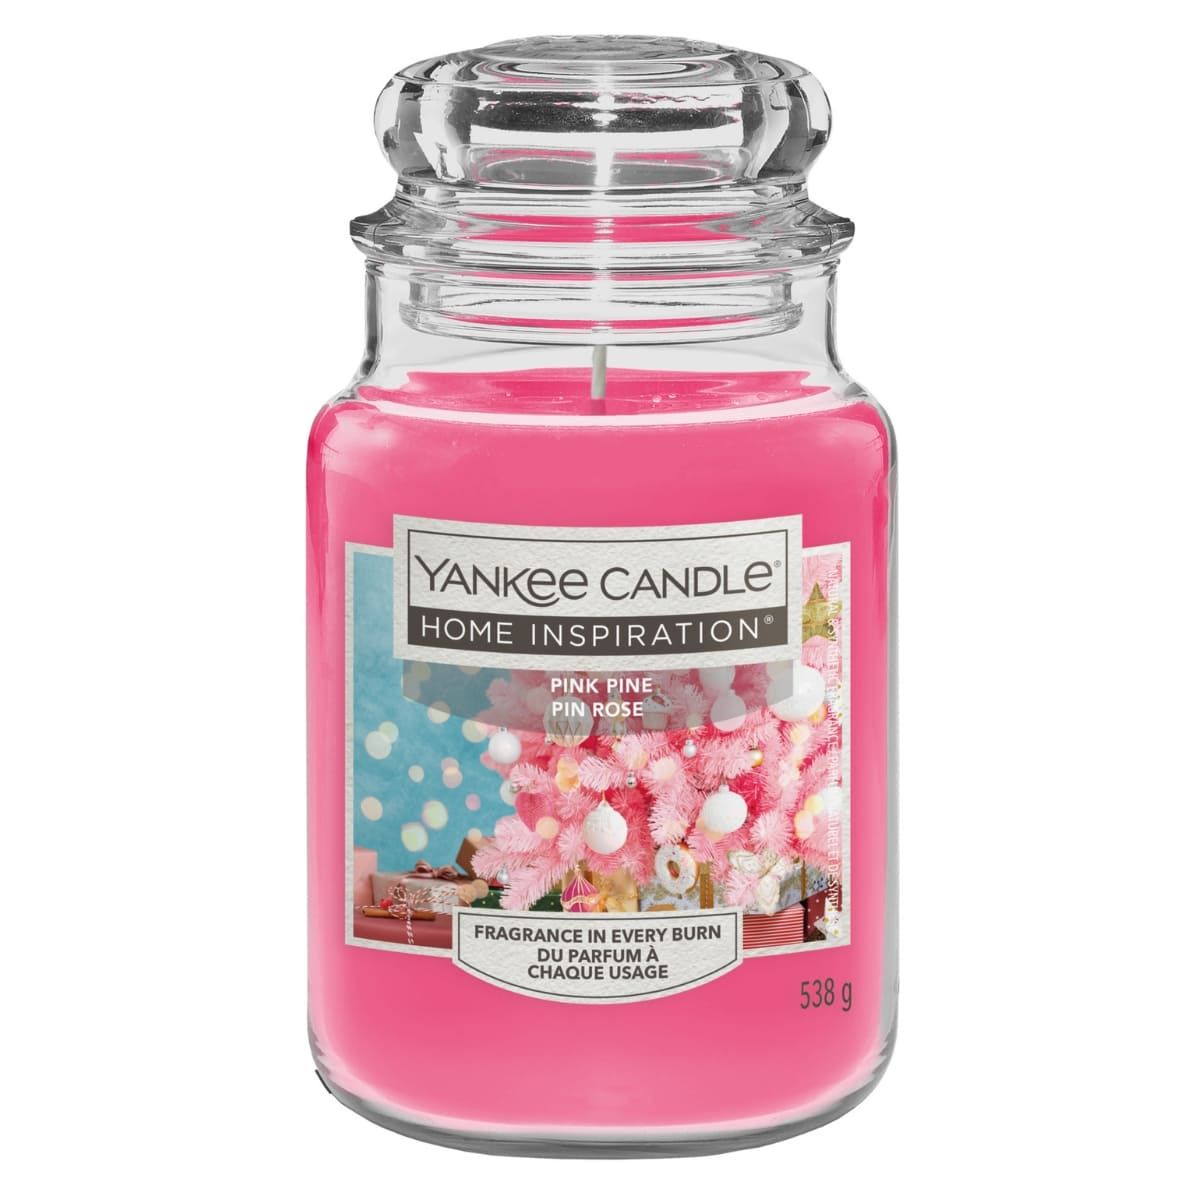 Ароматическая Свеча Yankee Candle Home Inspiration Pink Pine, 538 гр ароматическая свеча yankee candle home inspiration pink pine 538 гр